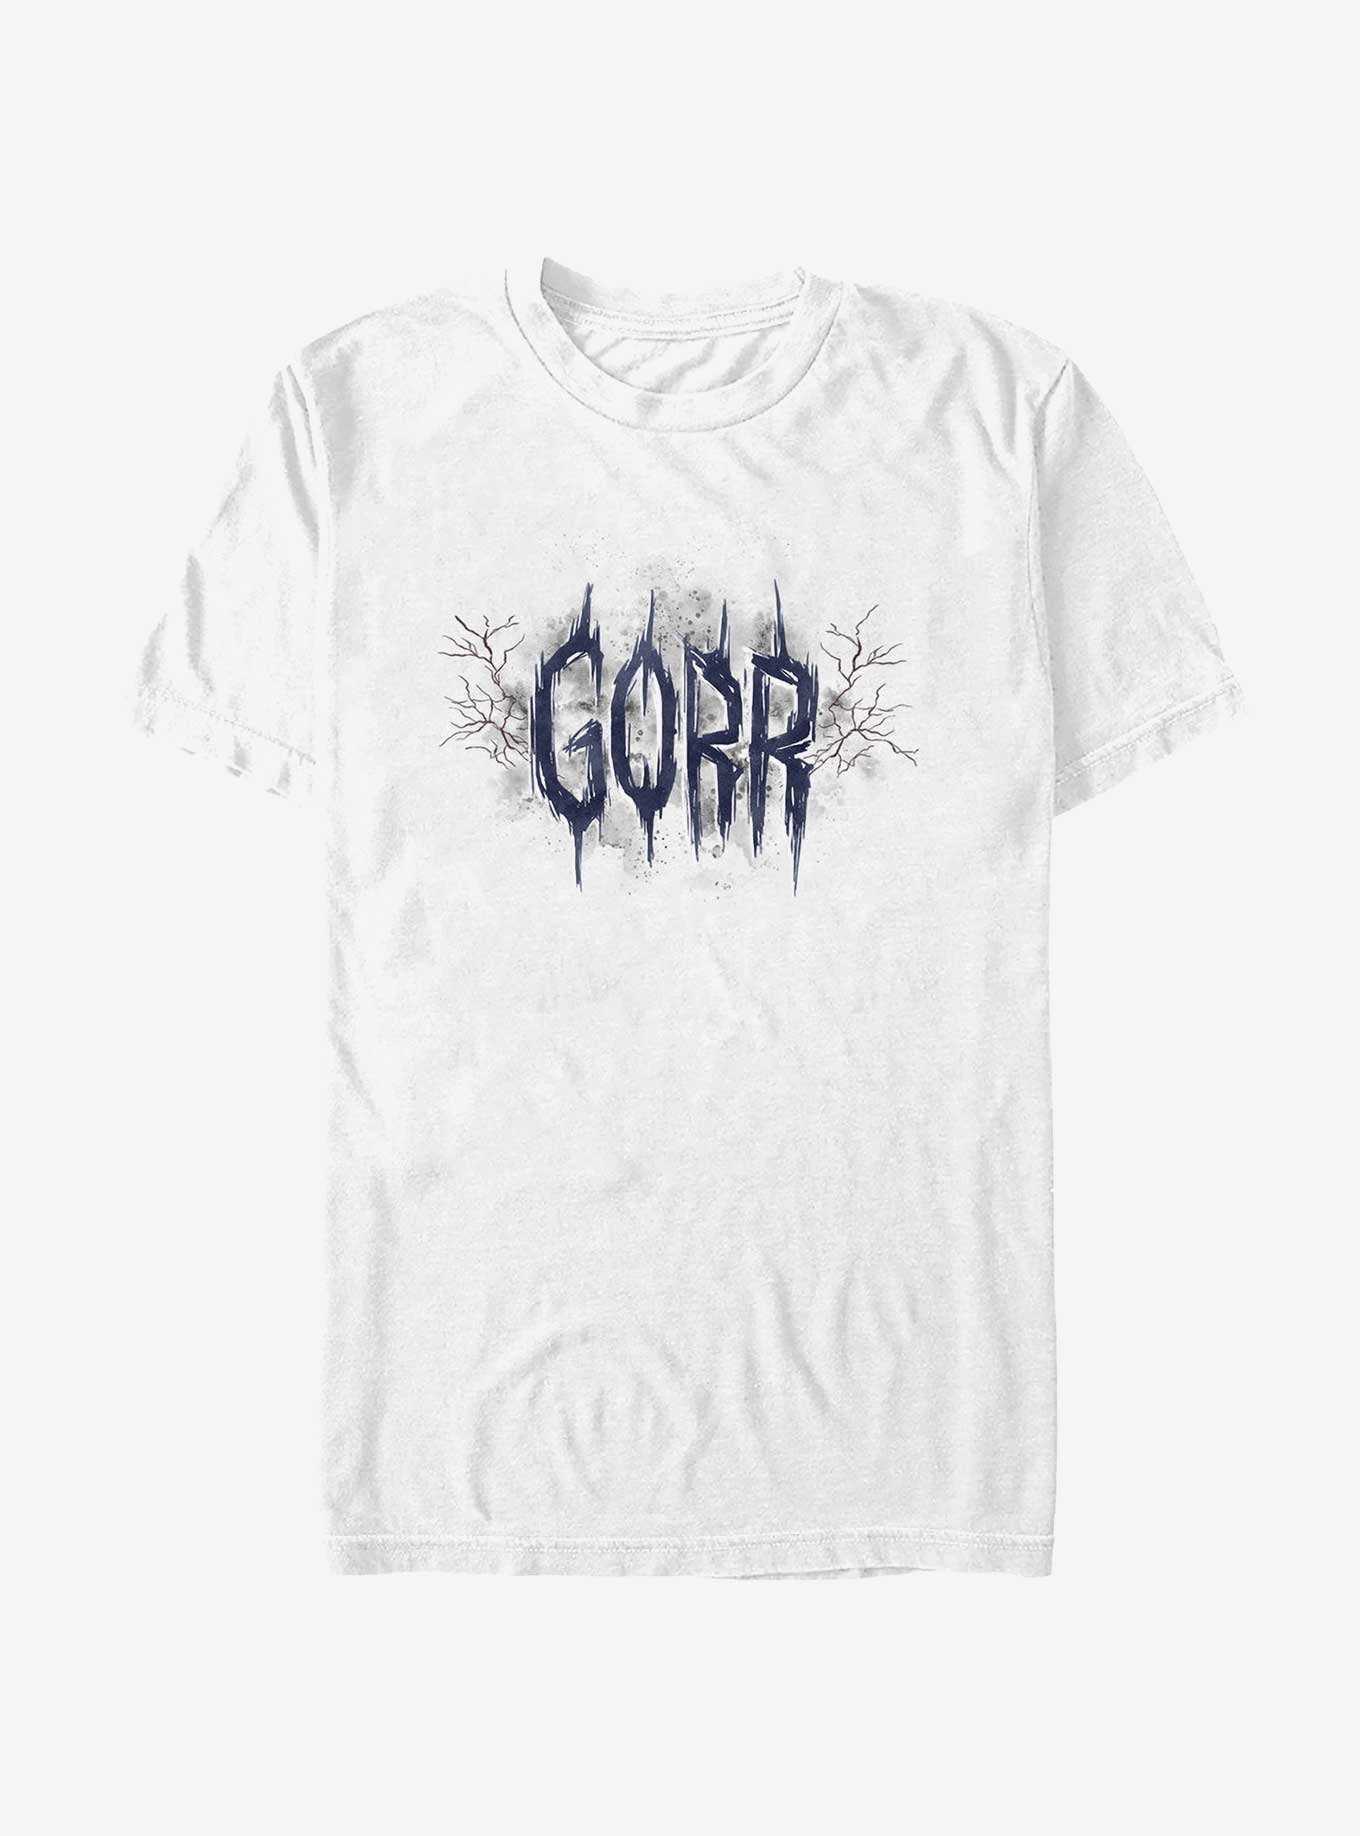 Marvel Thor Gorr Graphic T-Shirt, , hi-res